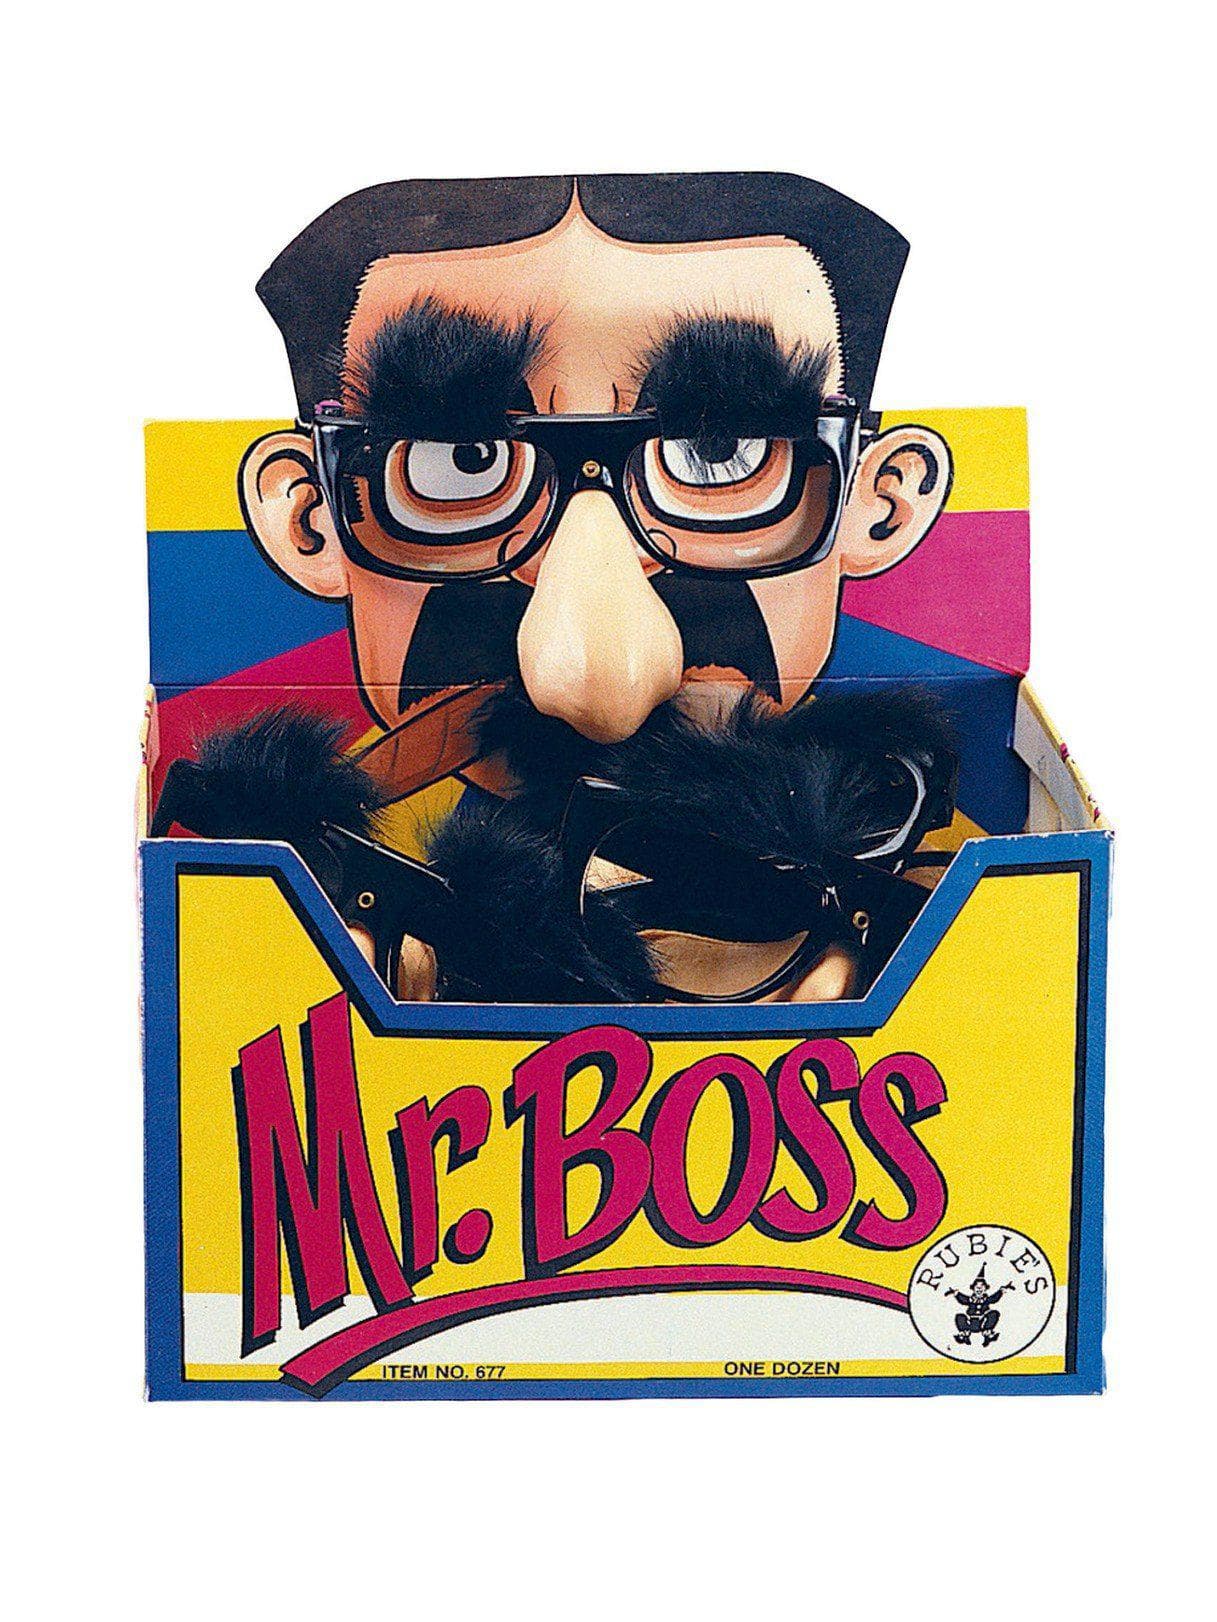 Mr. Boss Eyeglasses - costumes.com